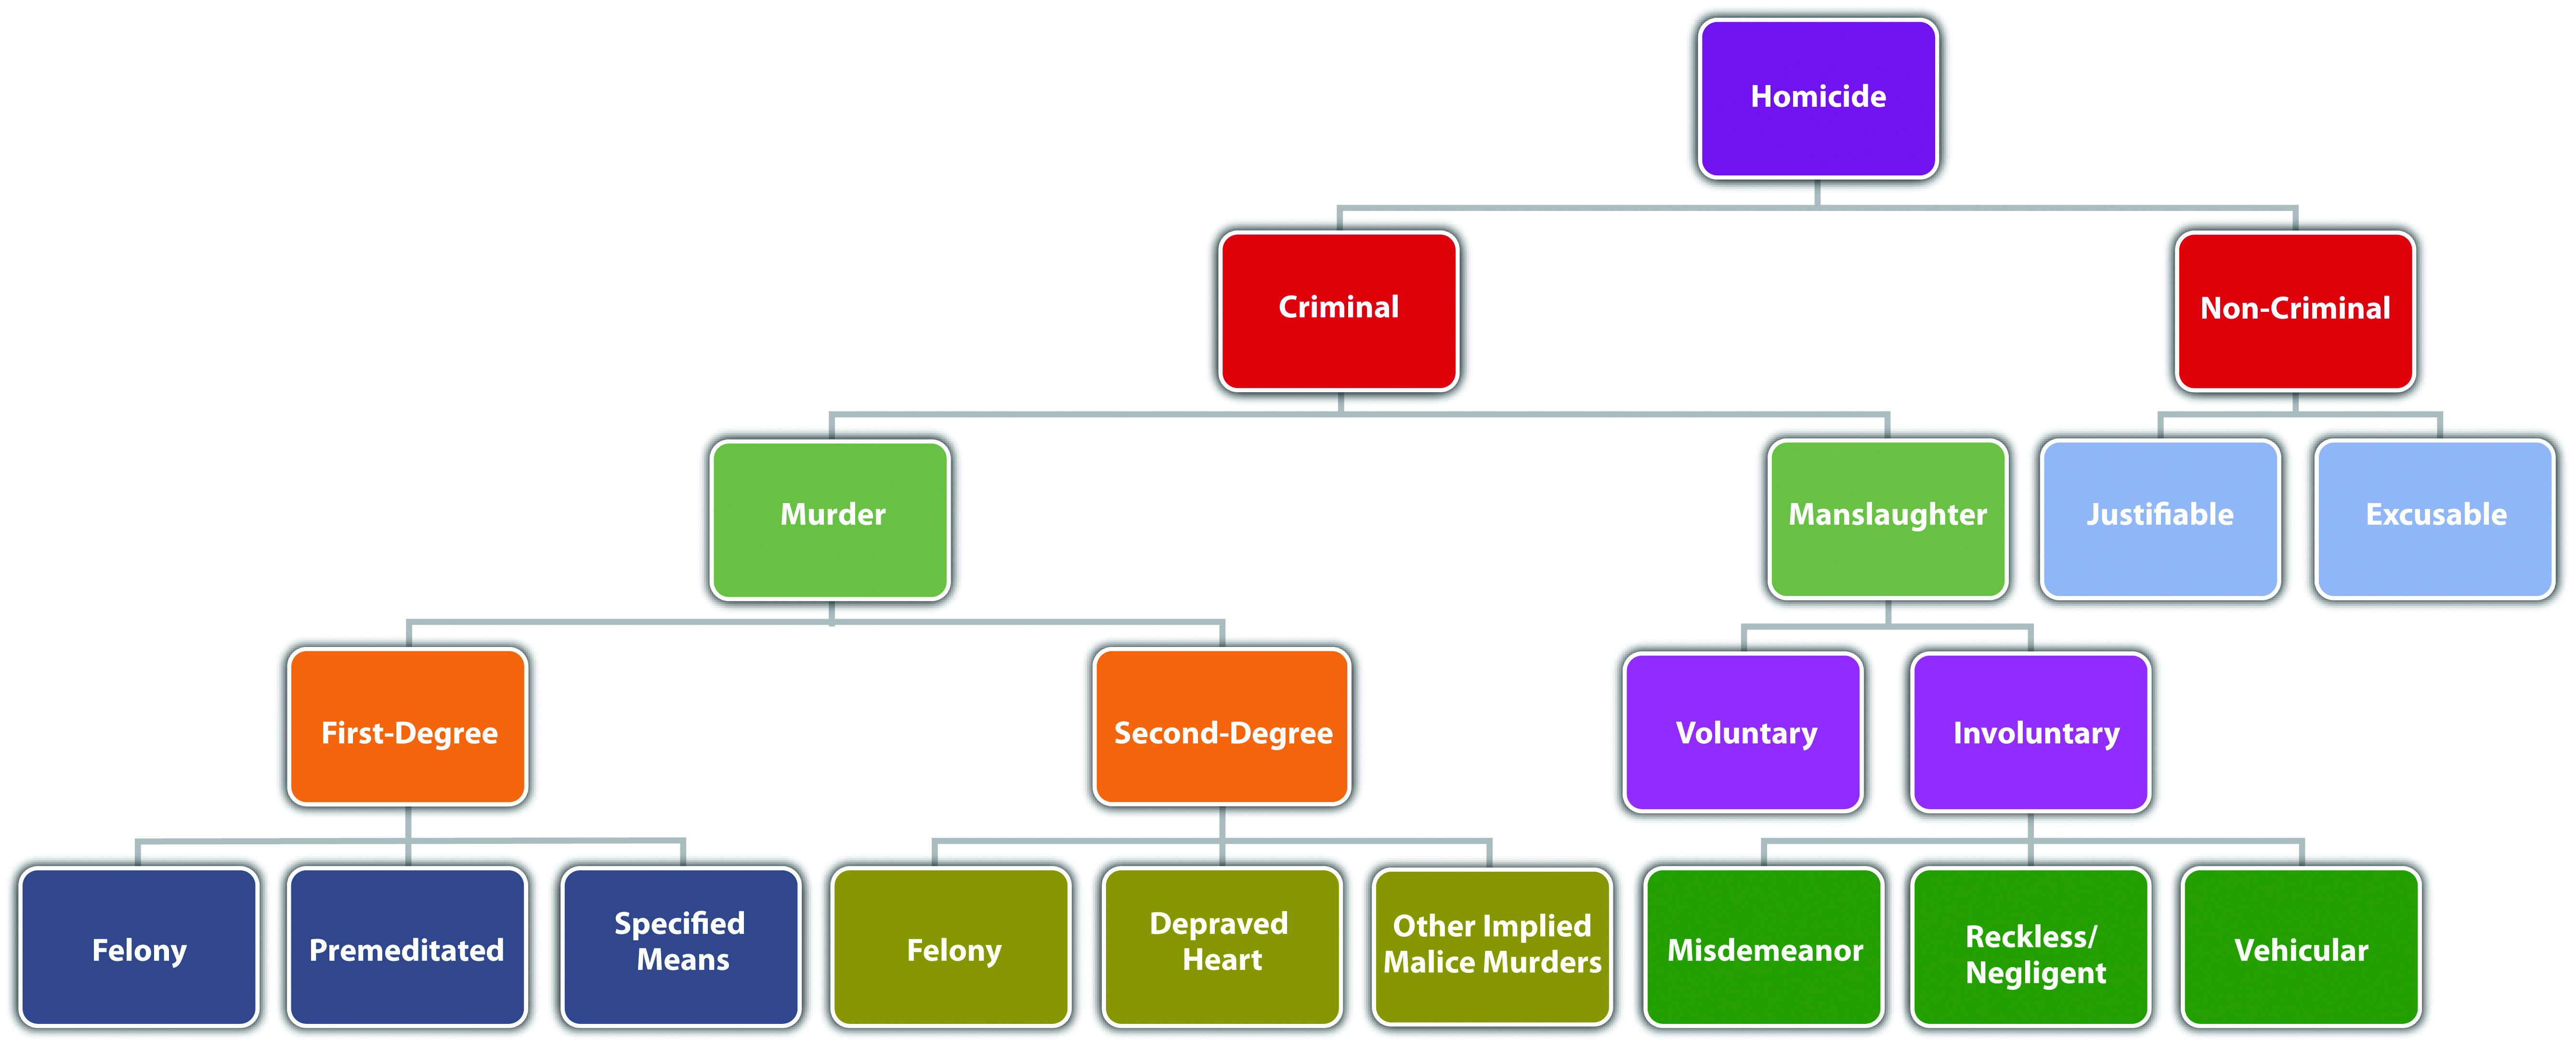 Diagram of Homicide